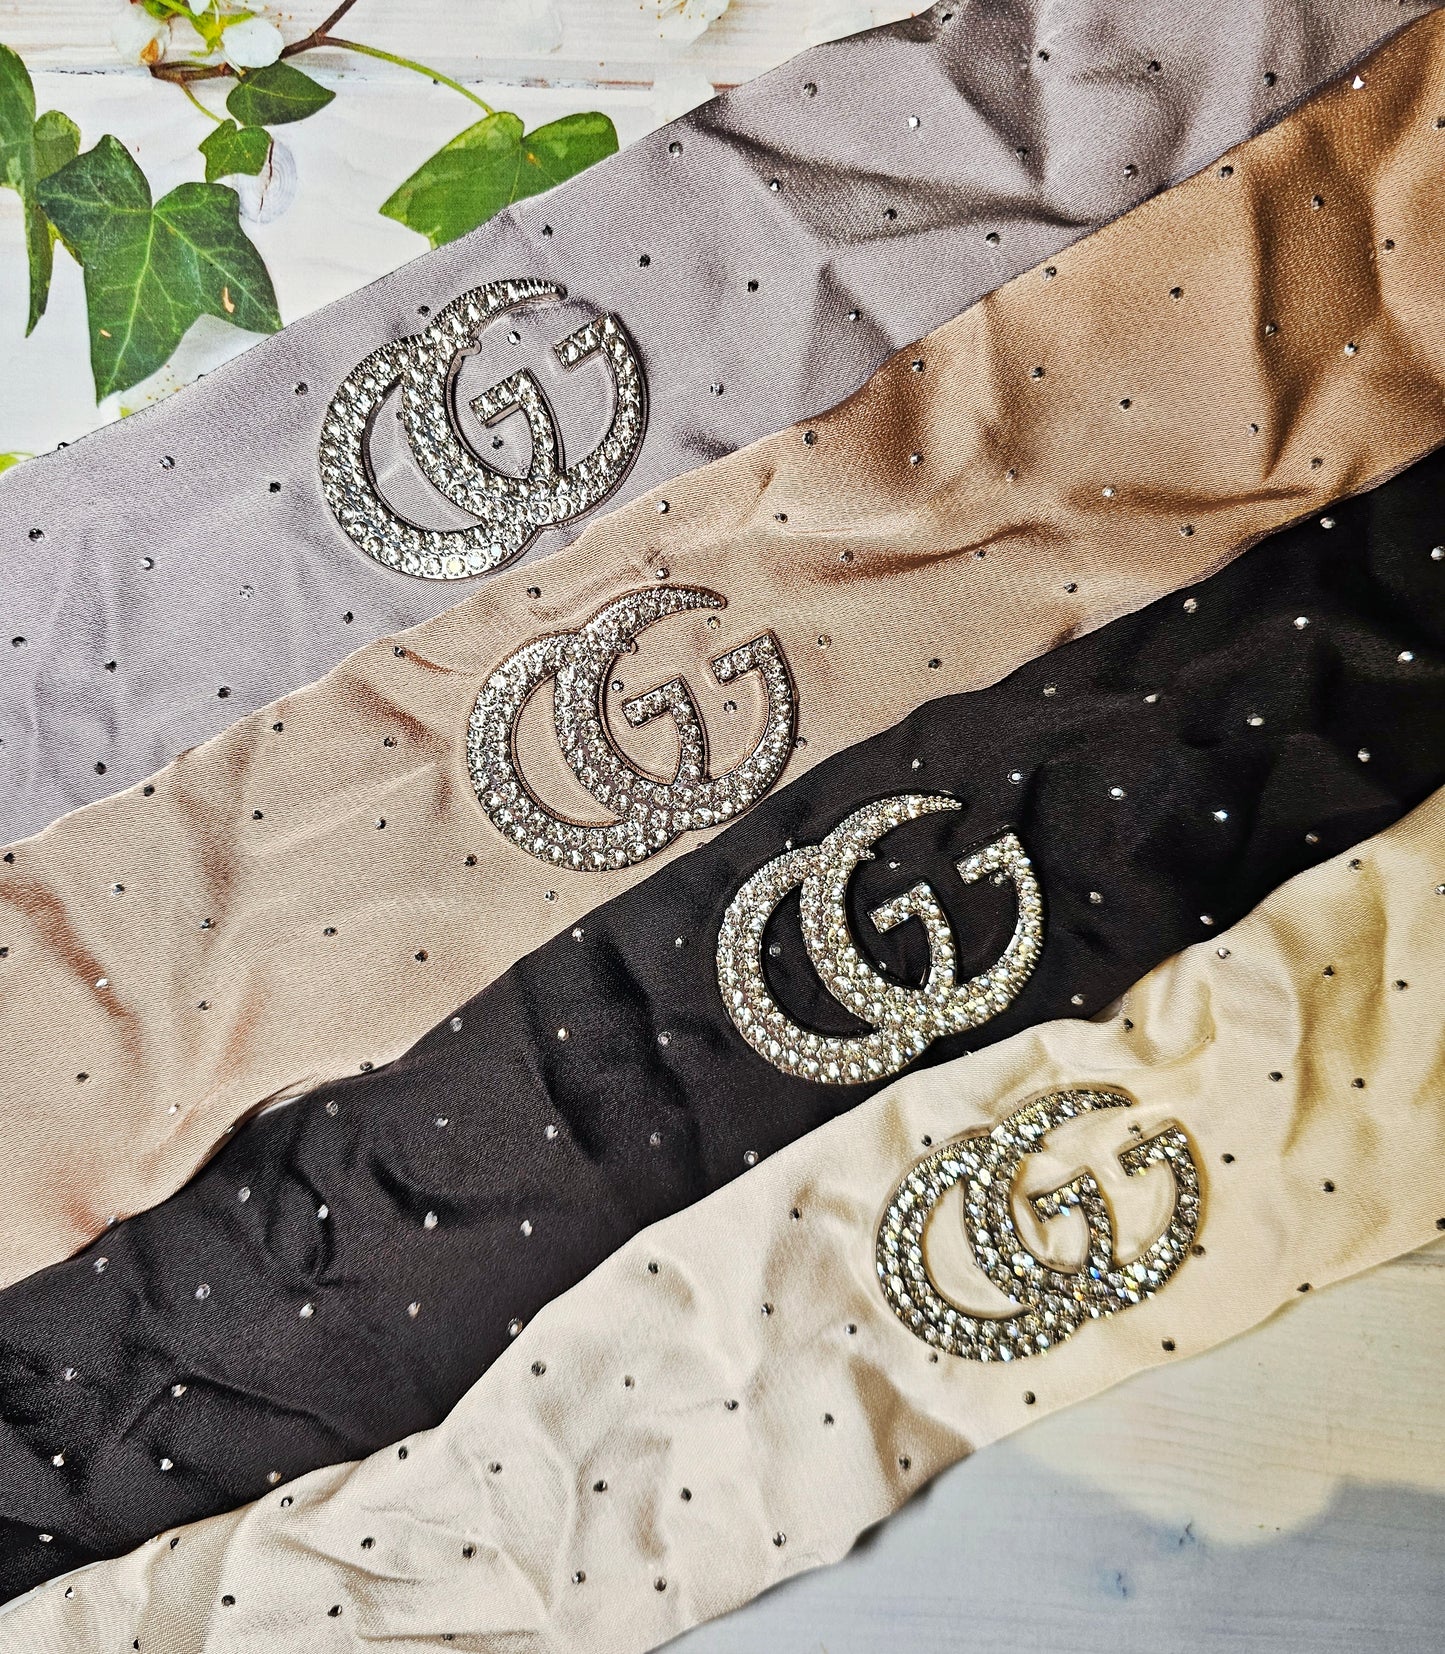 diamanté Gucci croc strap covers, come in pairs!